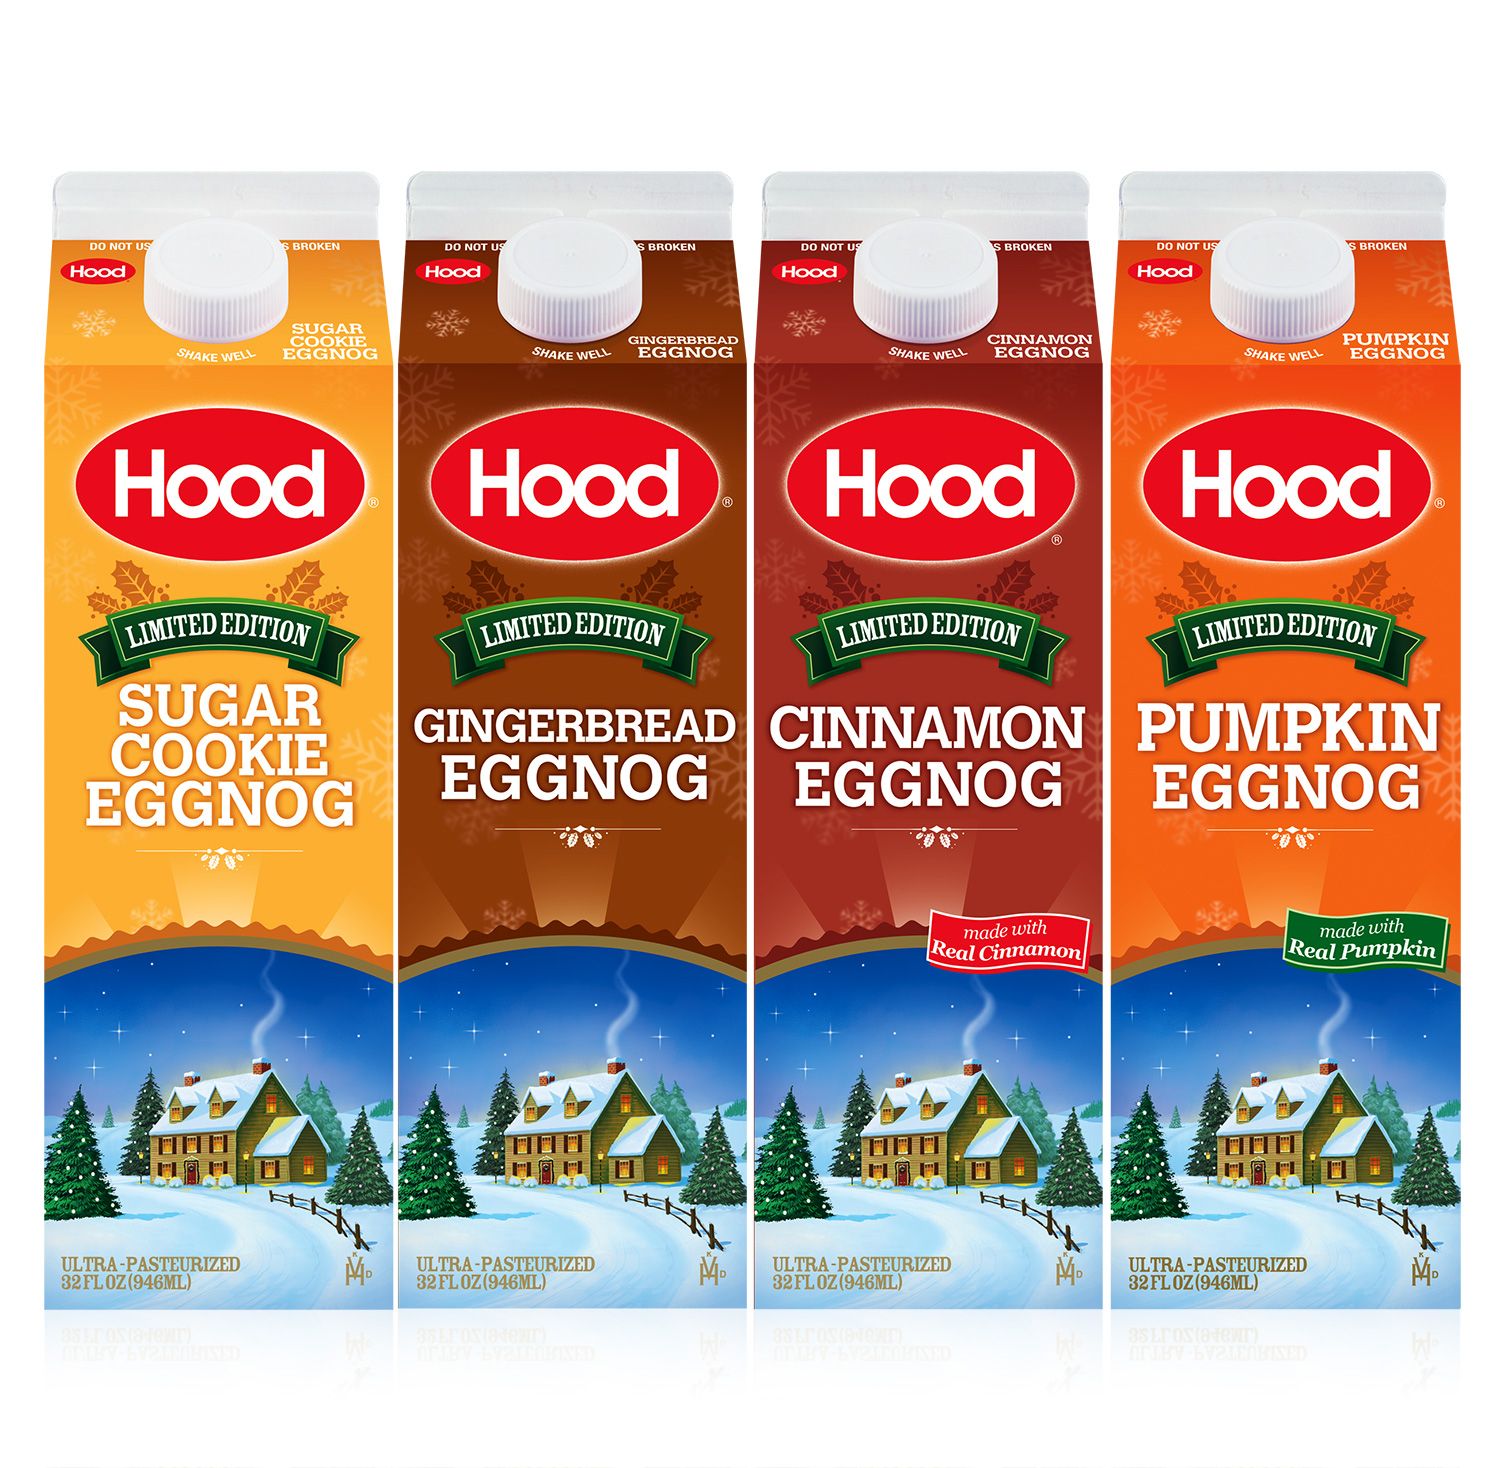 hood eggnog packaging design